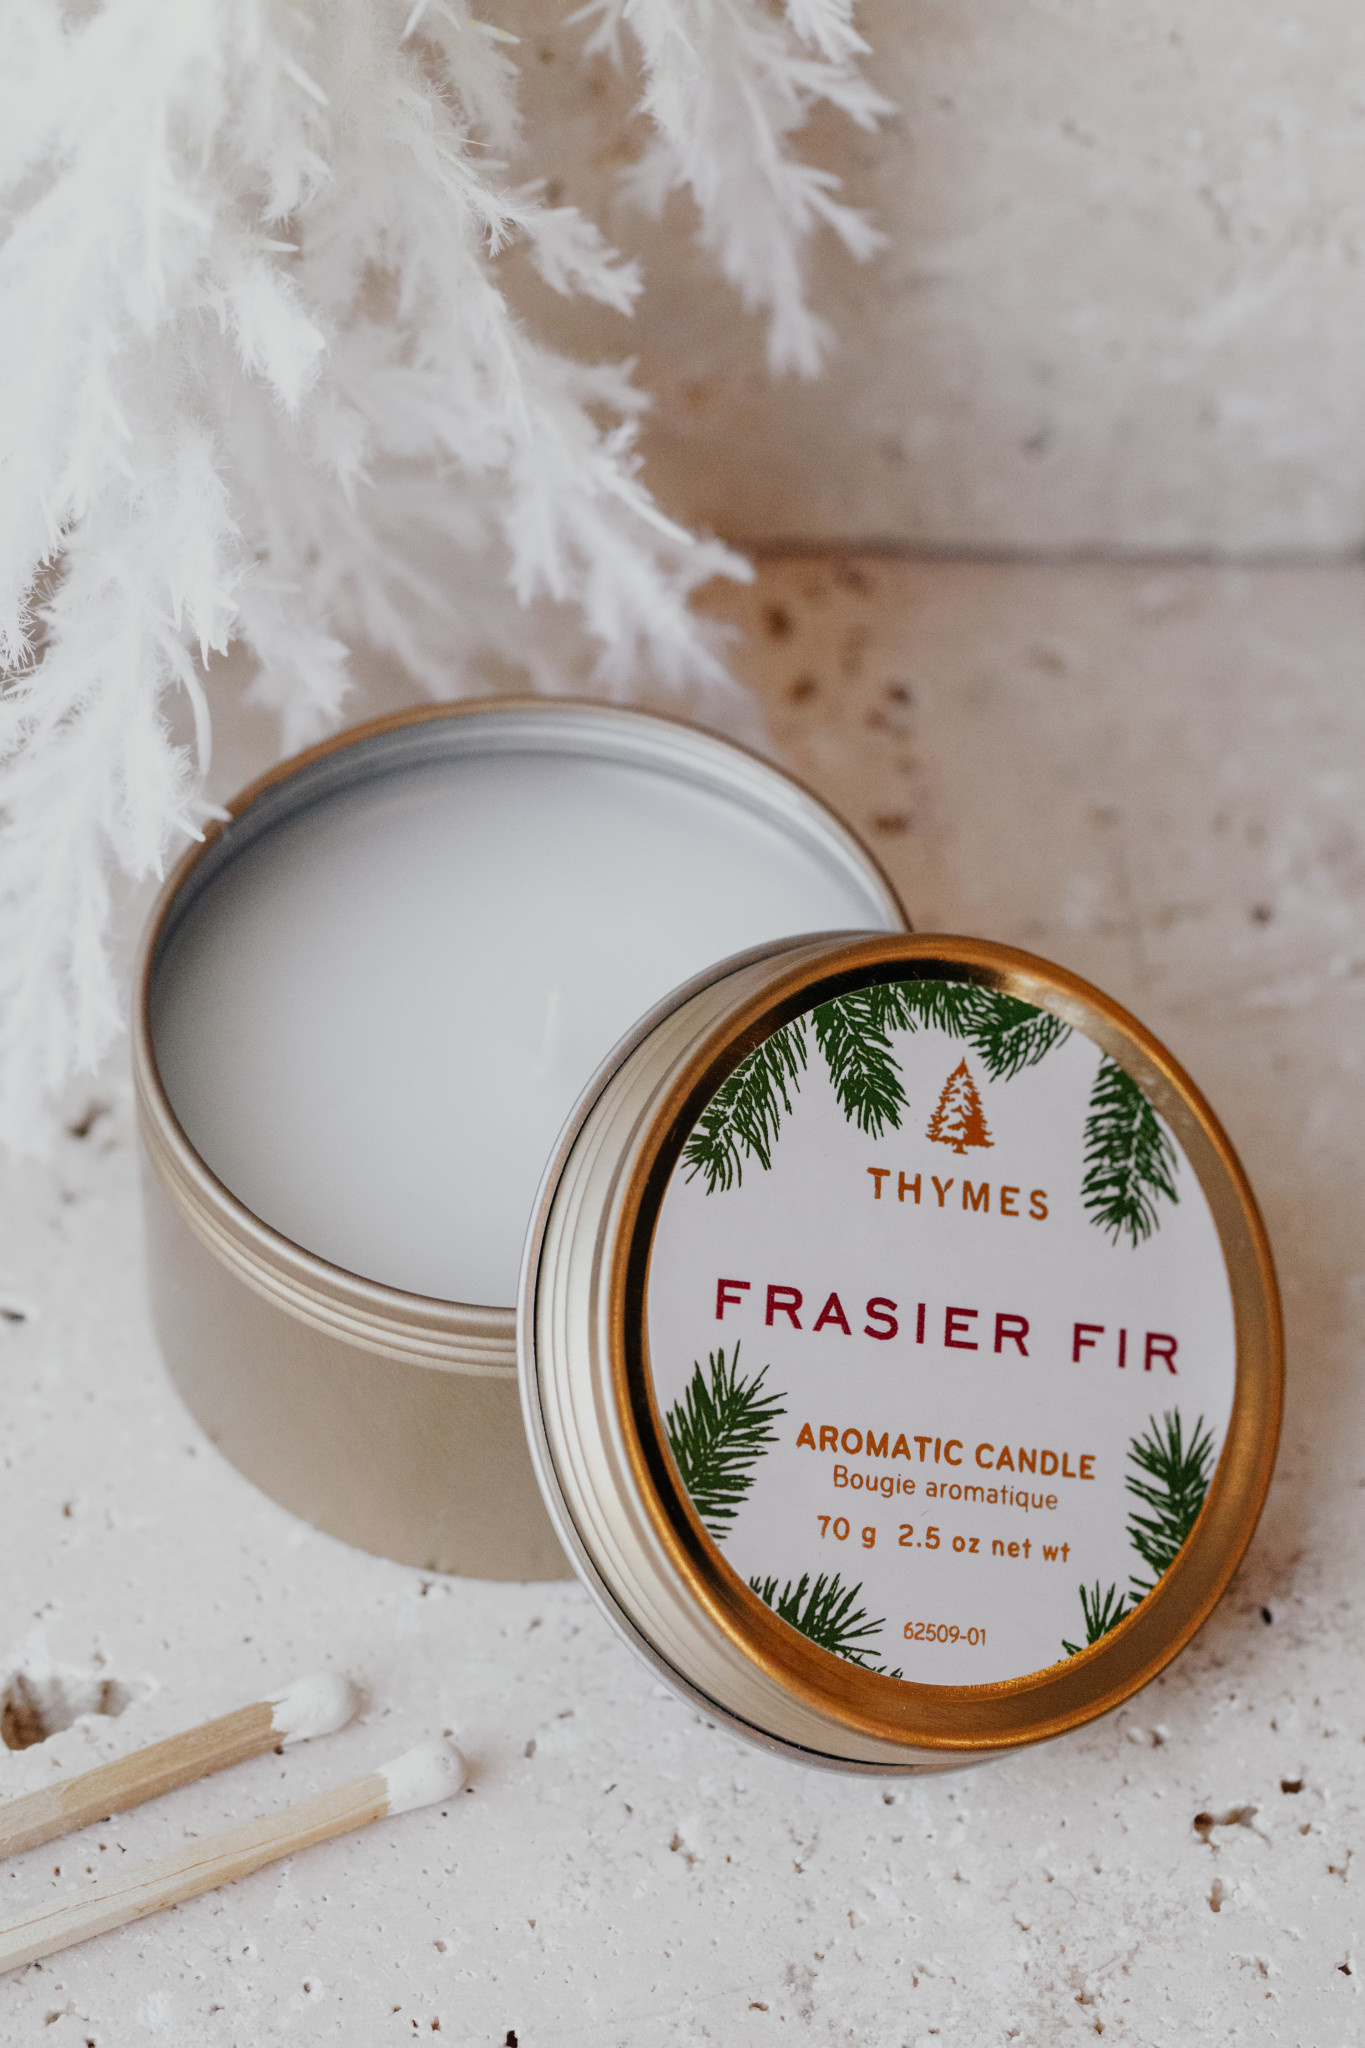 Thymes - Frasier Fir Travel Tin Candle